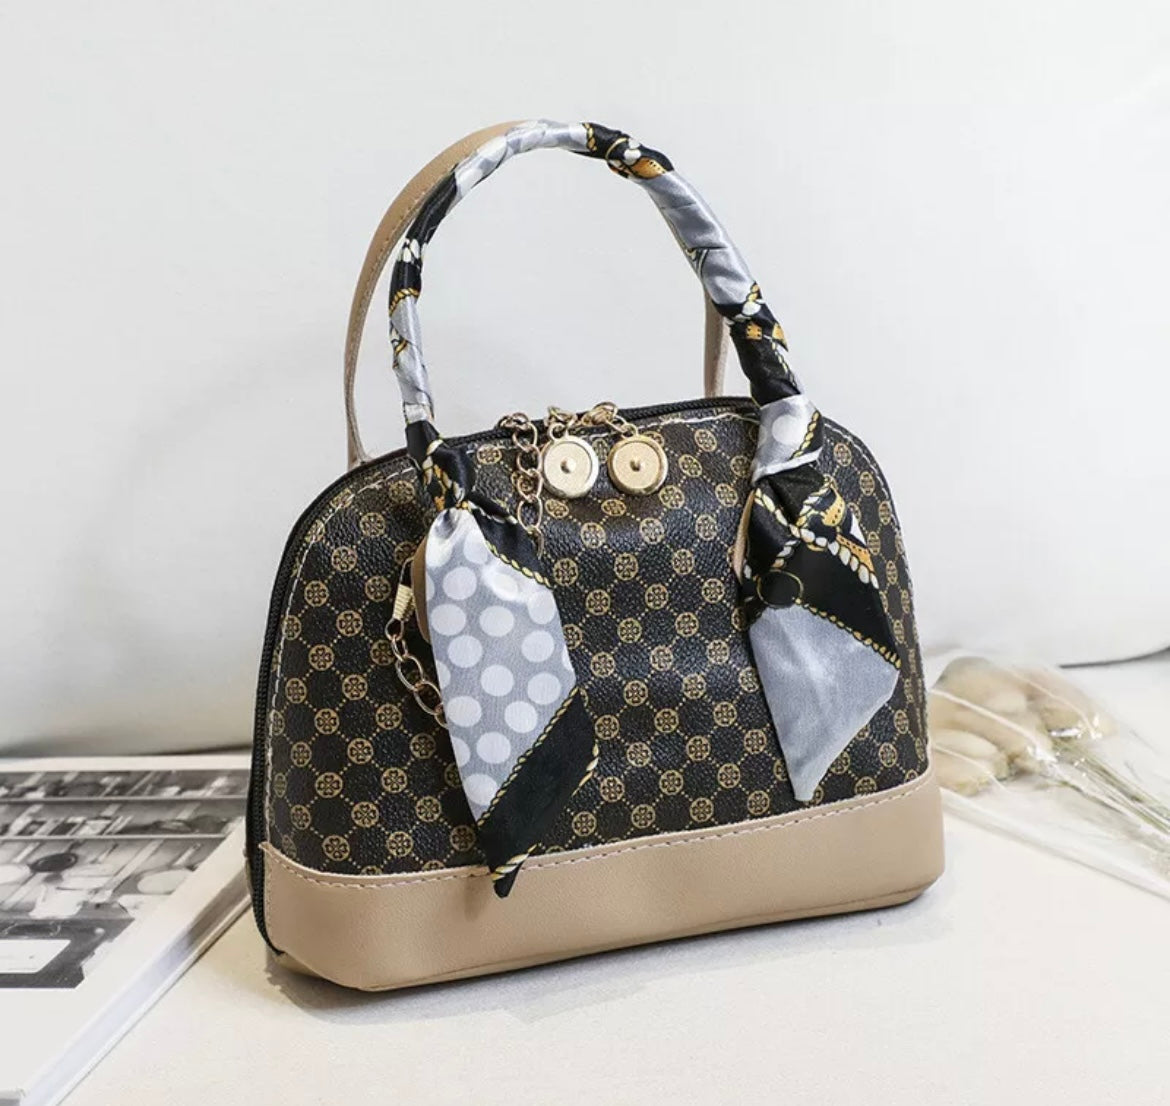 Handbag With Scarf Design